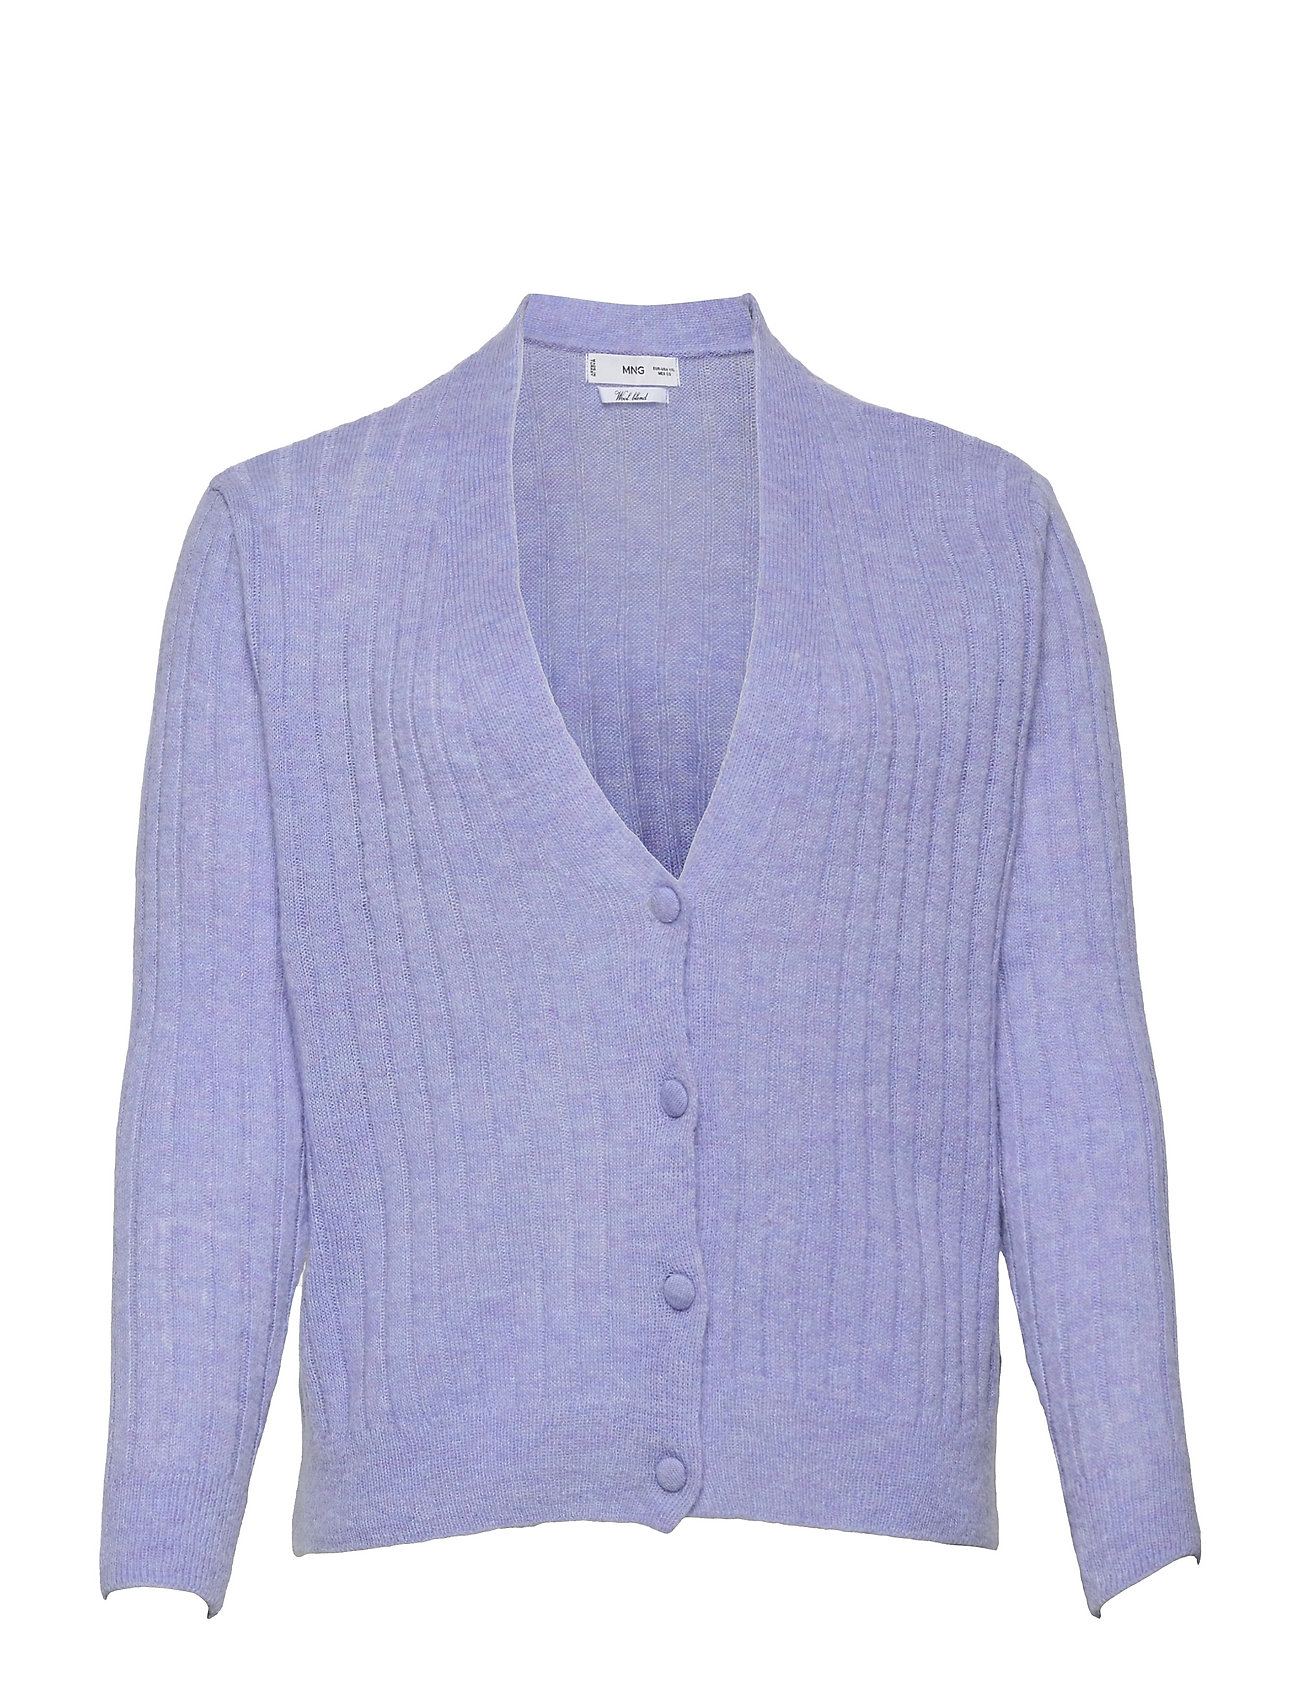 Parton Tops Knitwear Cardigans Blue Violeta By Mango